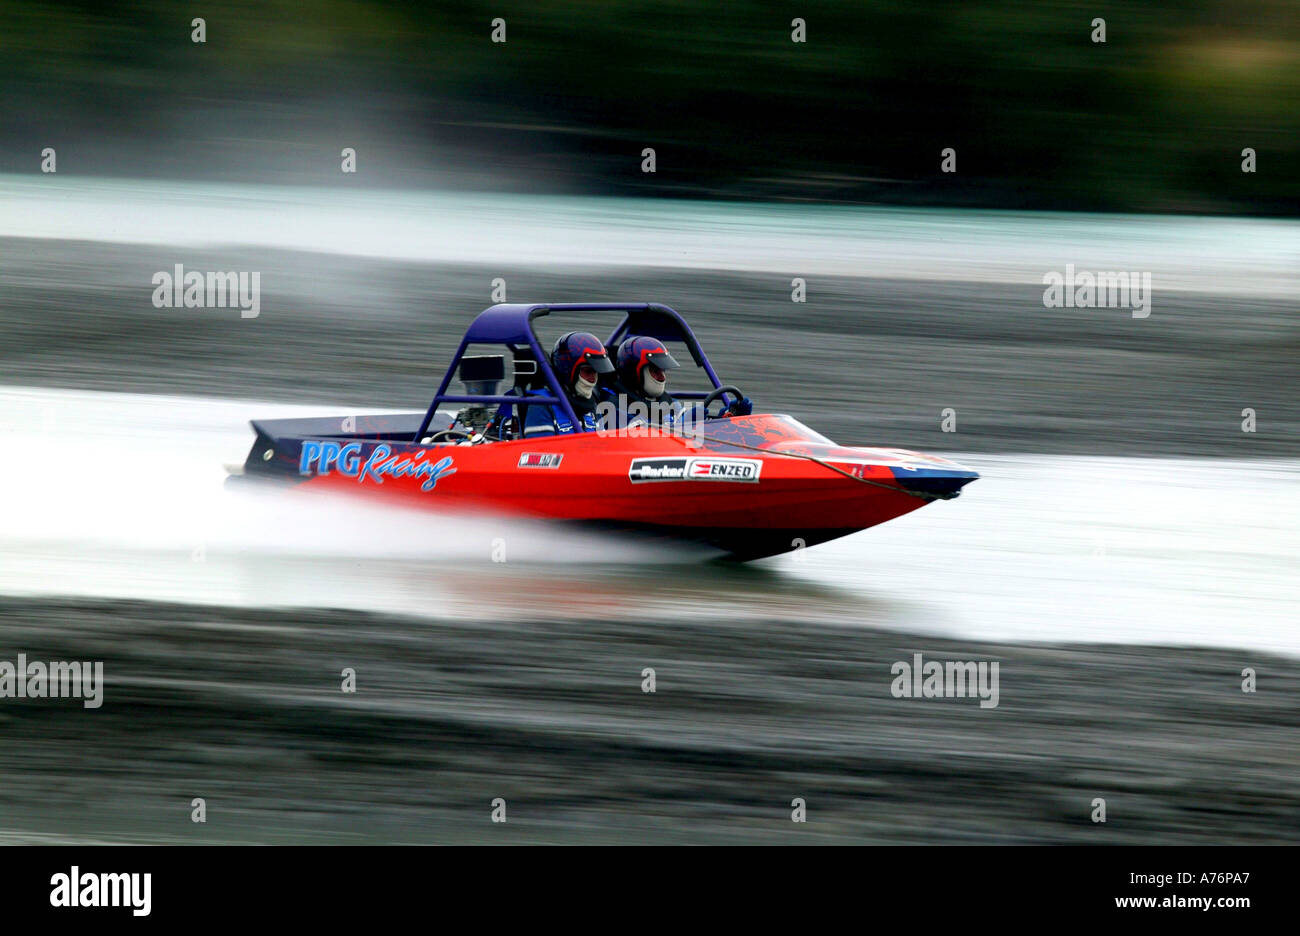 https://c8.alamy.com/comp/A76PA7/jet-sprint-racing-waimakariri-river-christchurch-new-zealand-08-feb-A76PA7.jpg